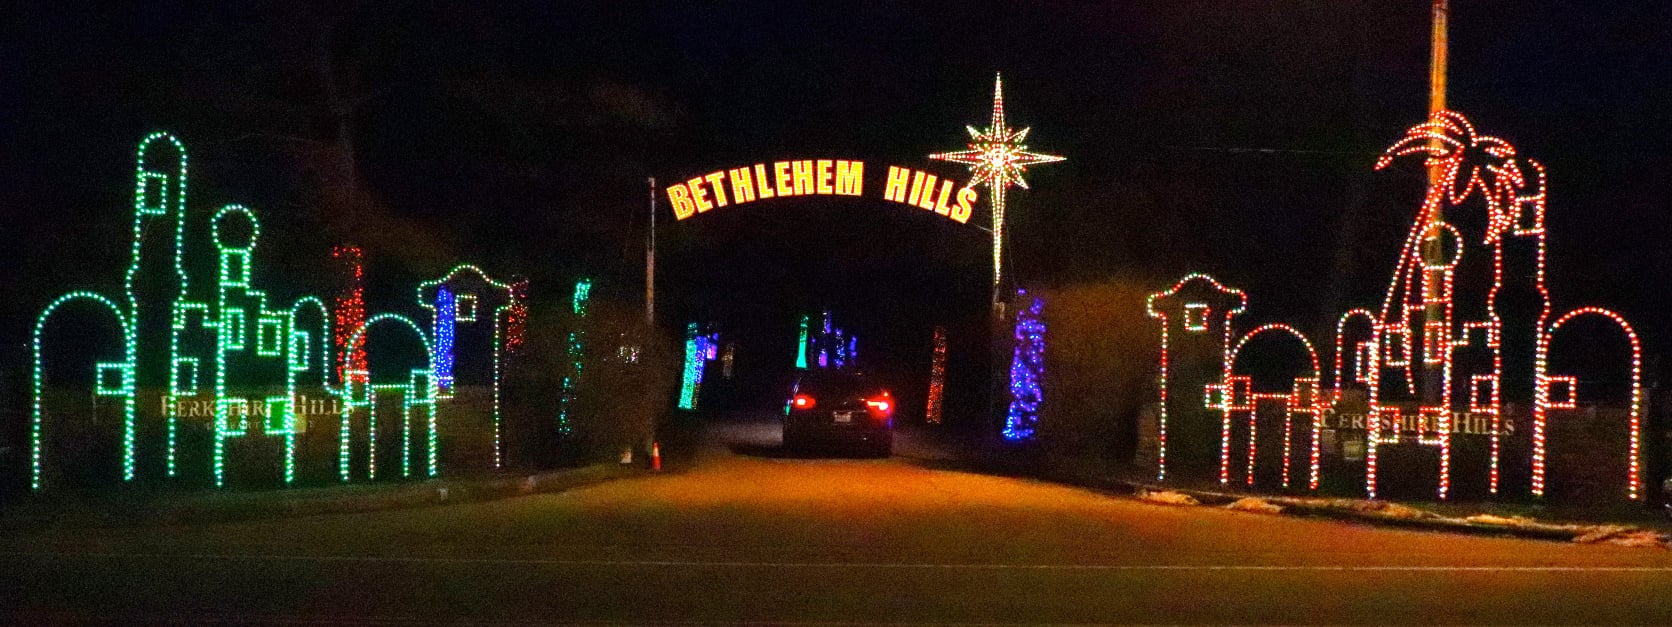 Bethlehem Hills Christmas Lights Park